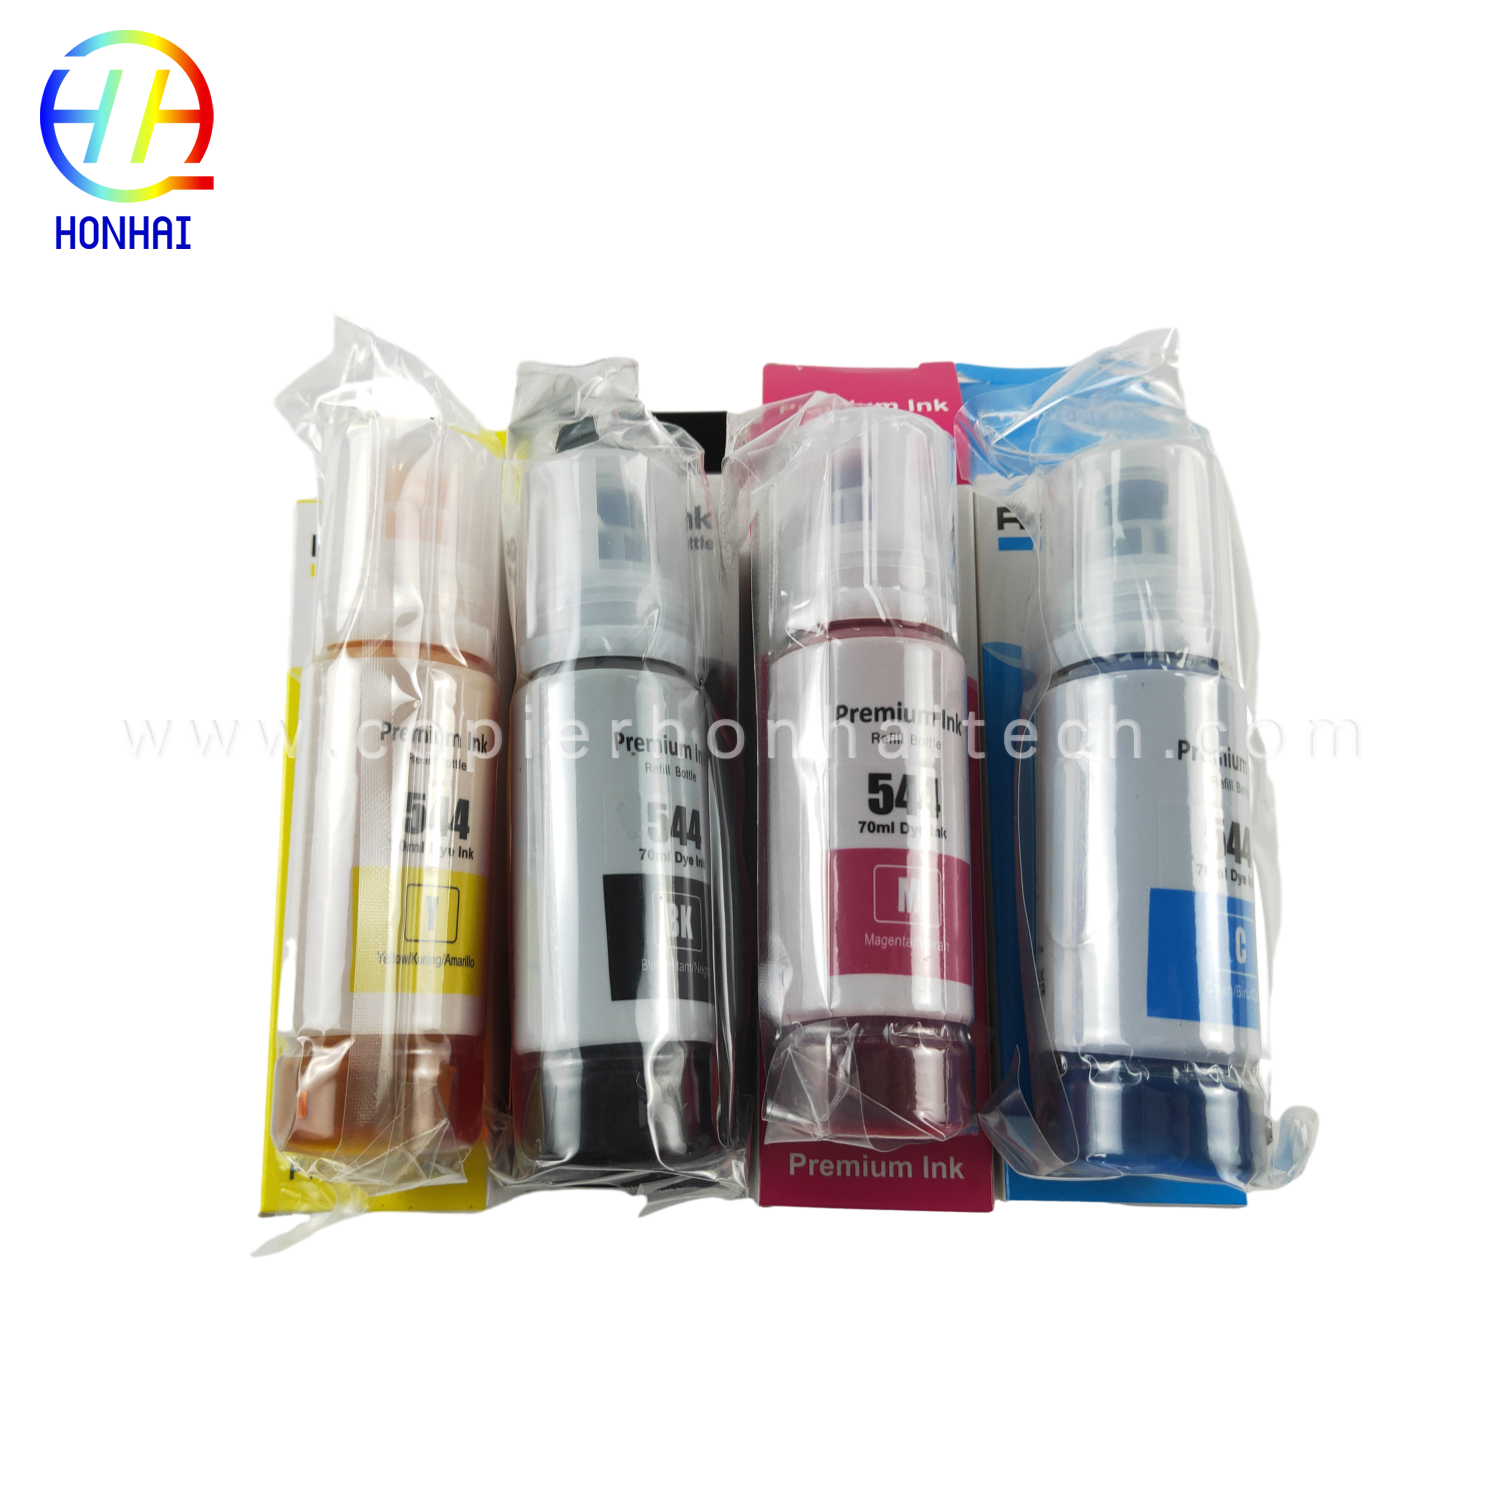 https://www.copierhonhaitech.com/botella-de-tinta-con-caja-70ml-for-epson-l1110-l3110-l3150-l5190-e-544-product/